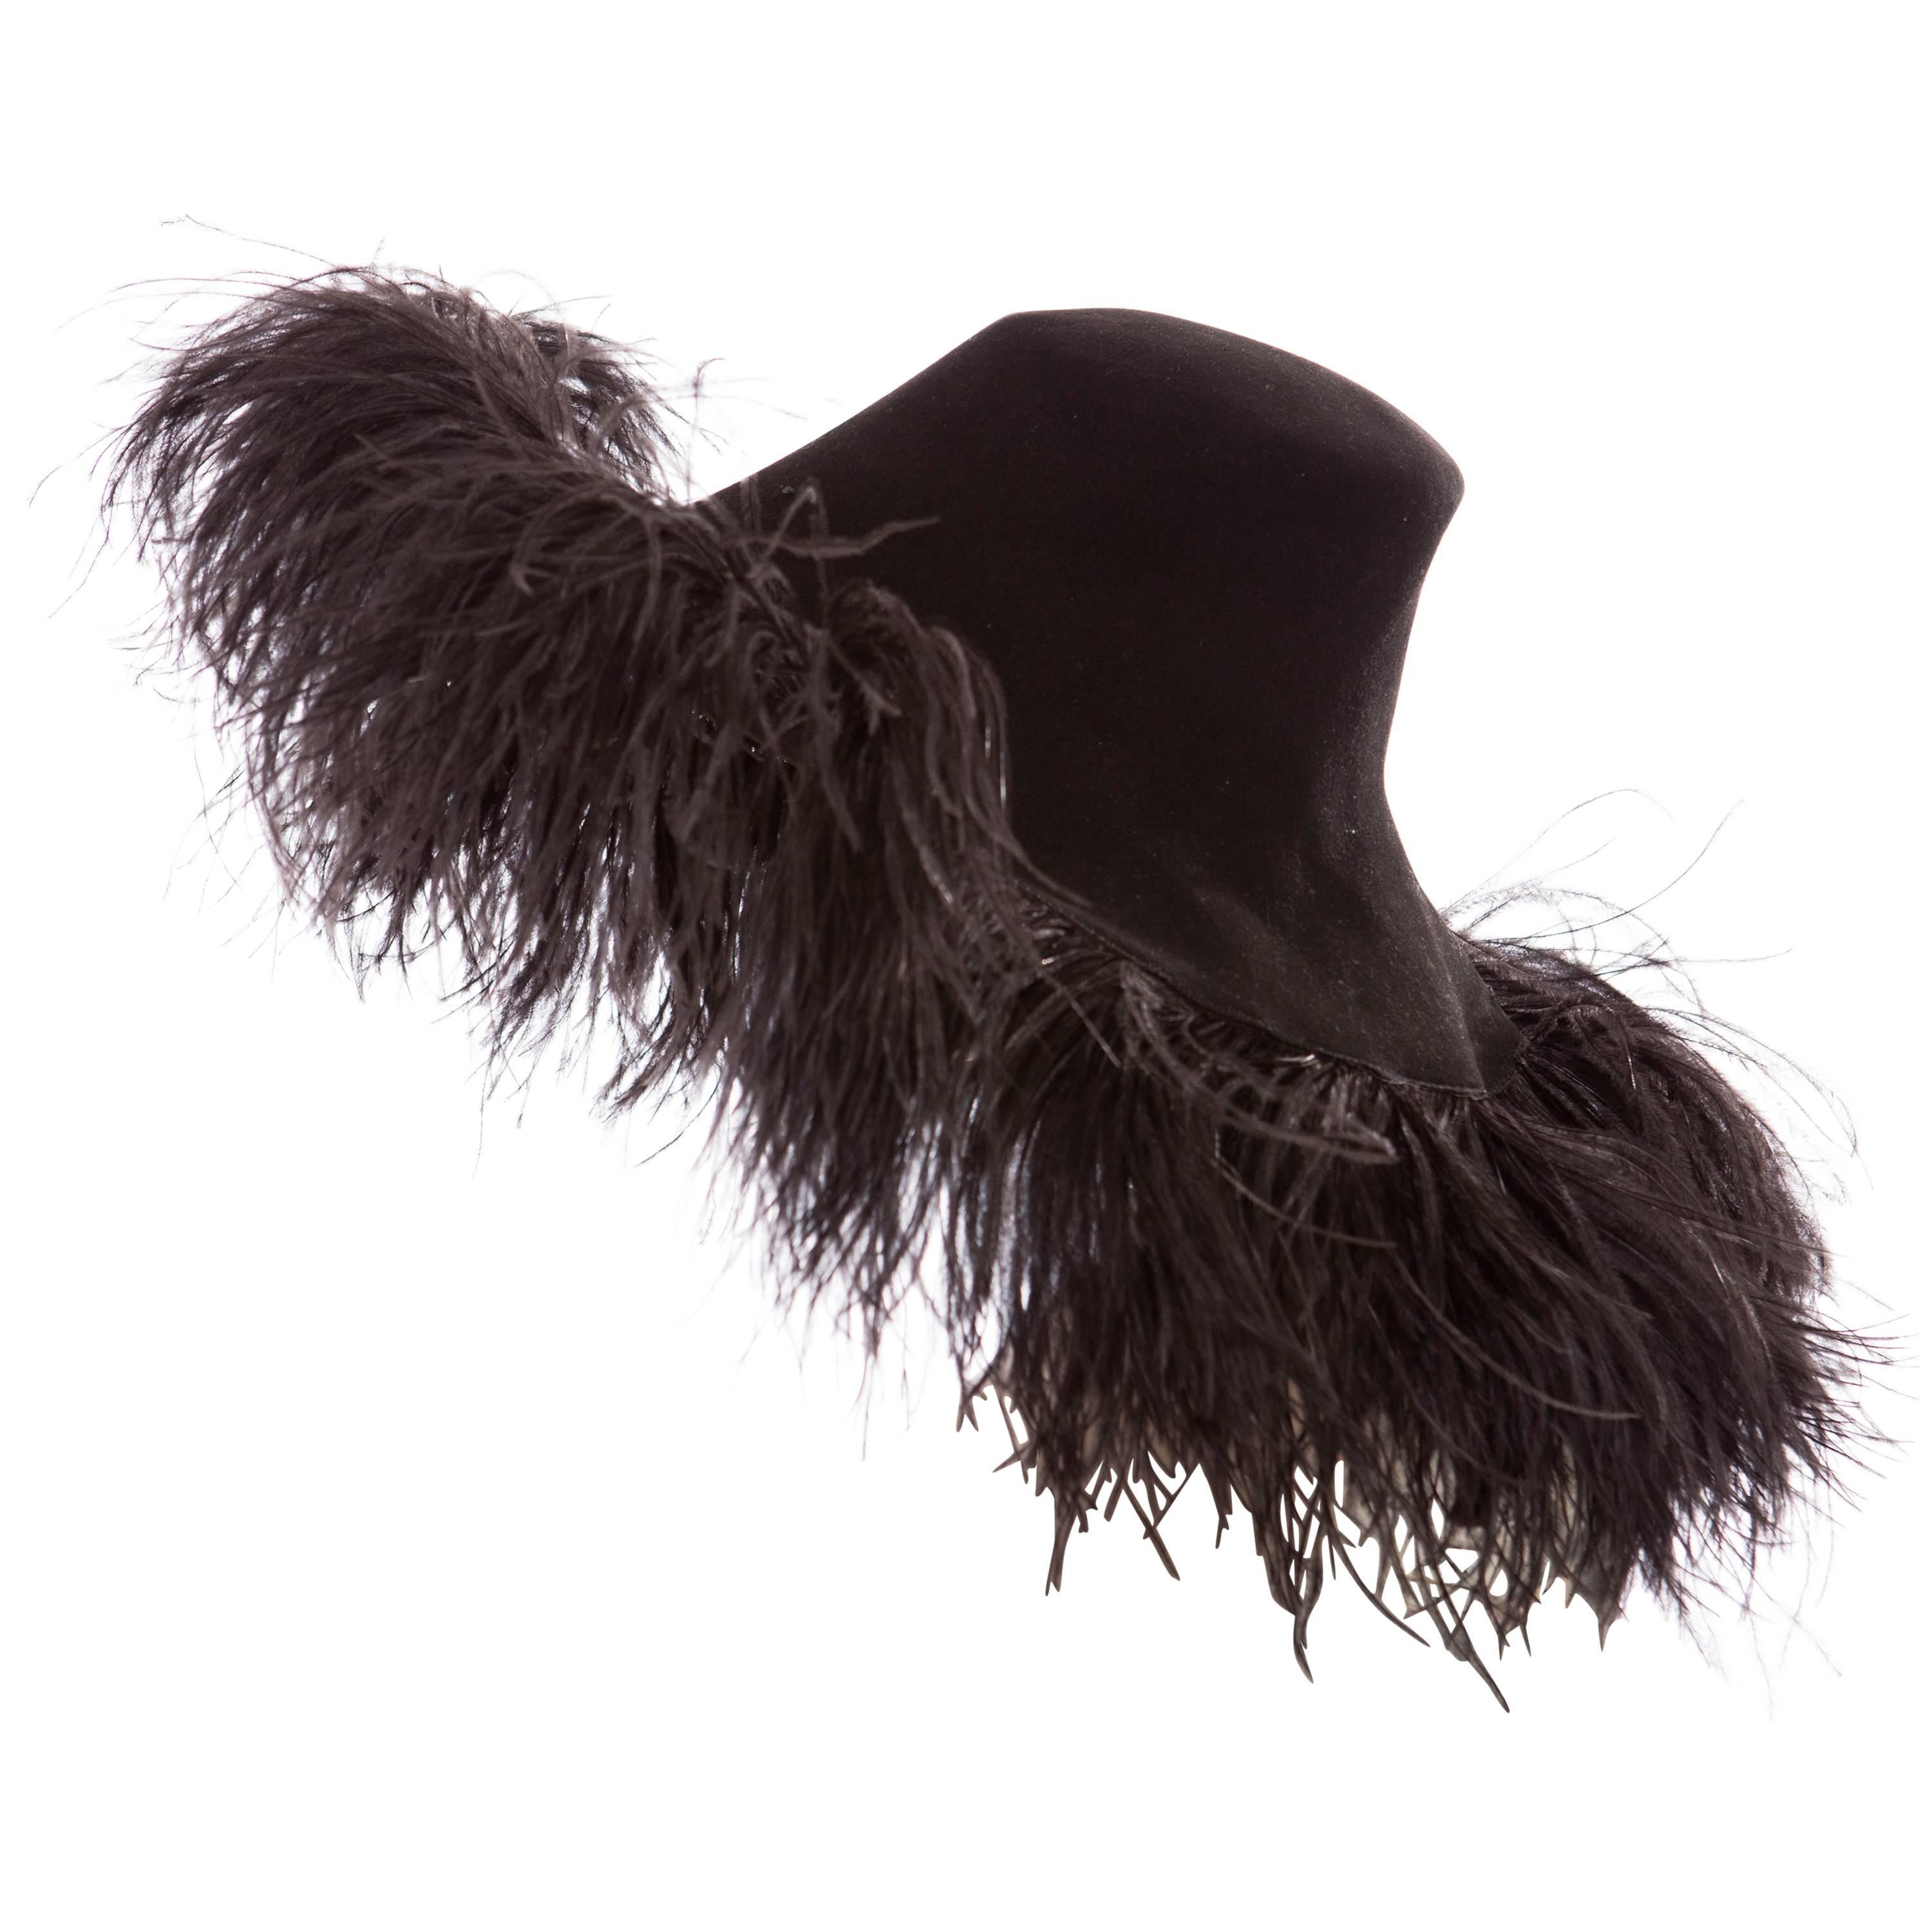 Alber Elbaz Lanvin Runway Black Wool Felt Hat Ostrich Feather Trim, Fall 2014